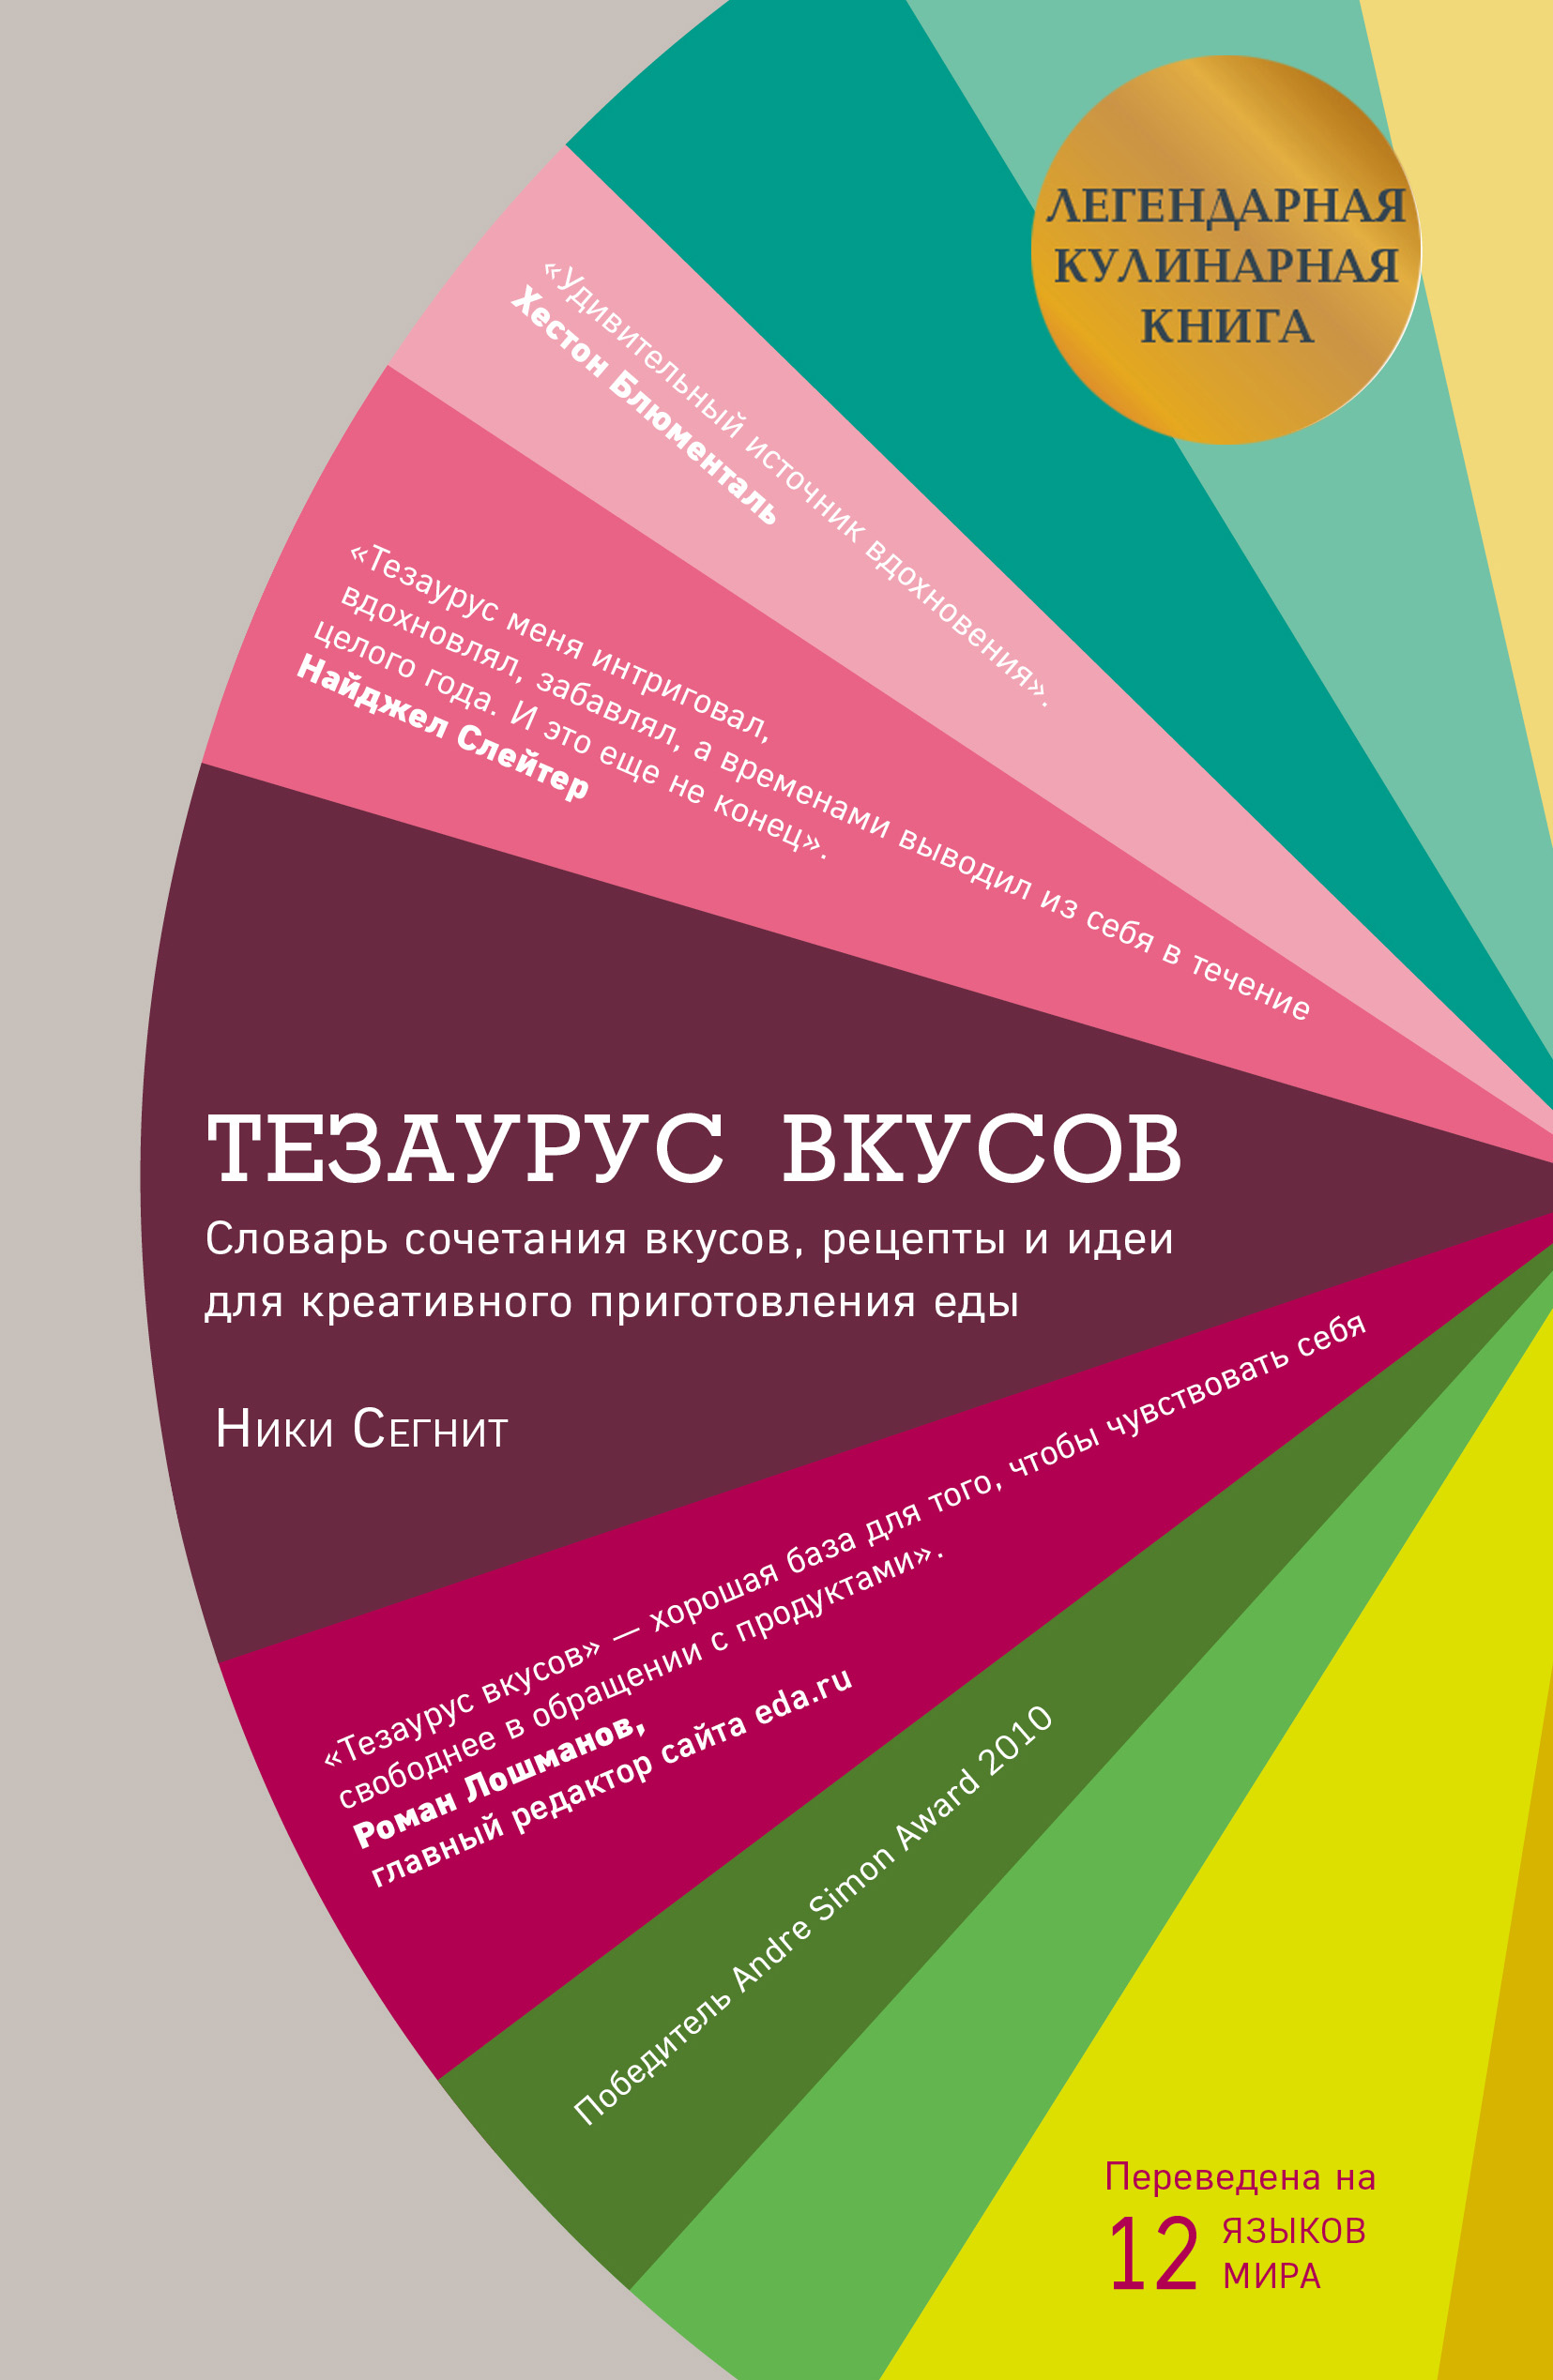 Тезаурус вкусов, Ники Сегнит – скачать книгу fb2, epub, pdf на ЛитРес